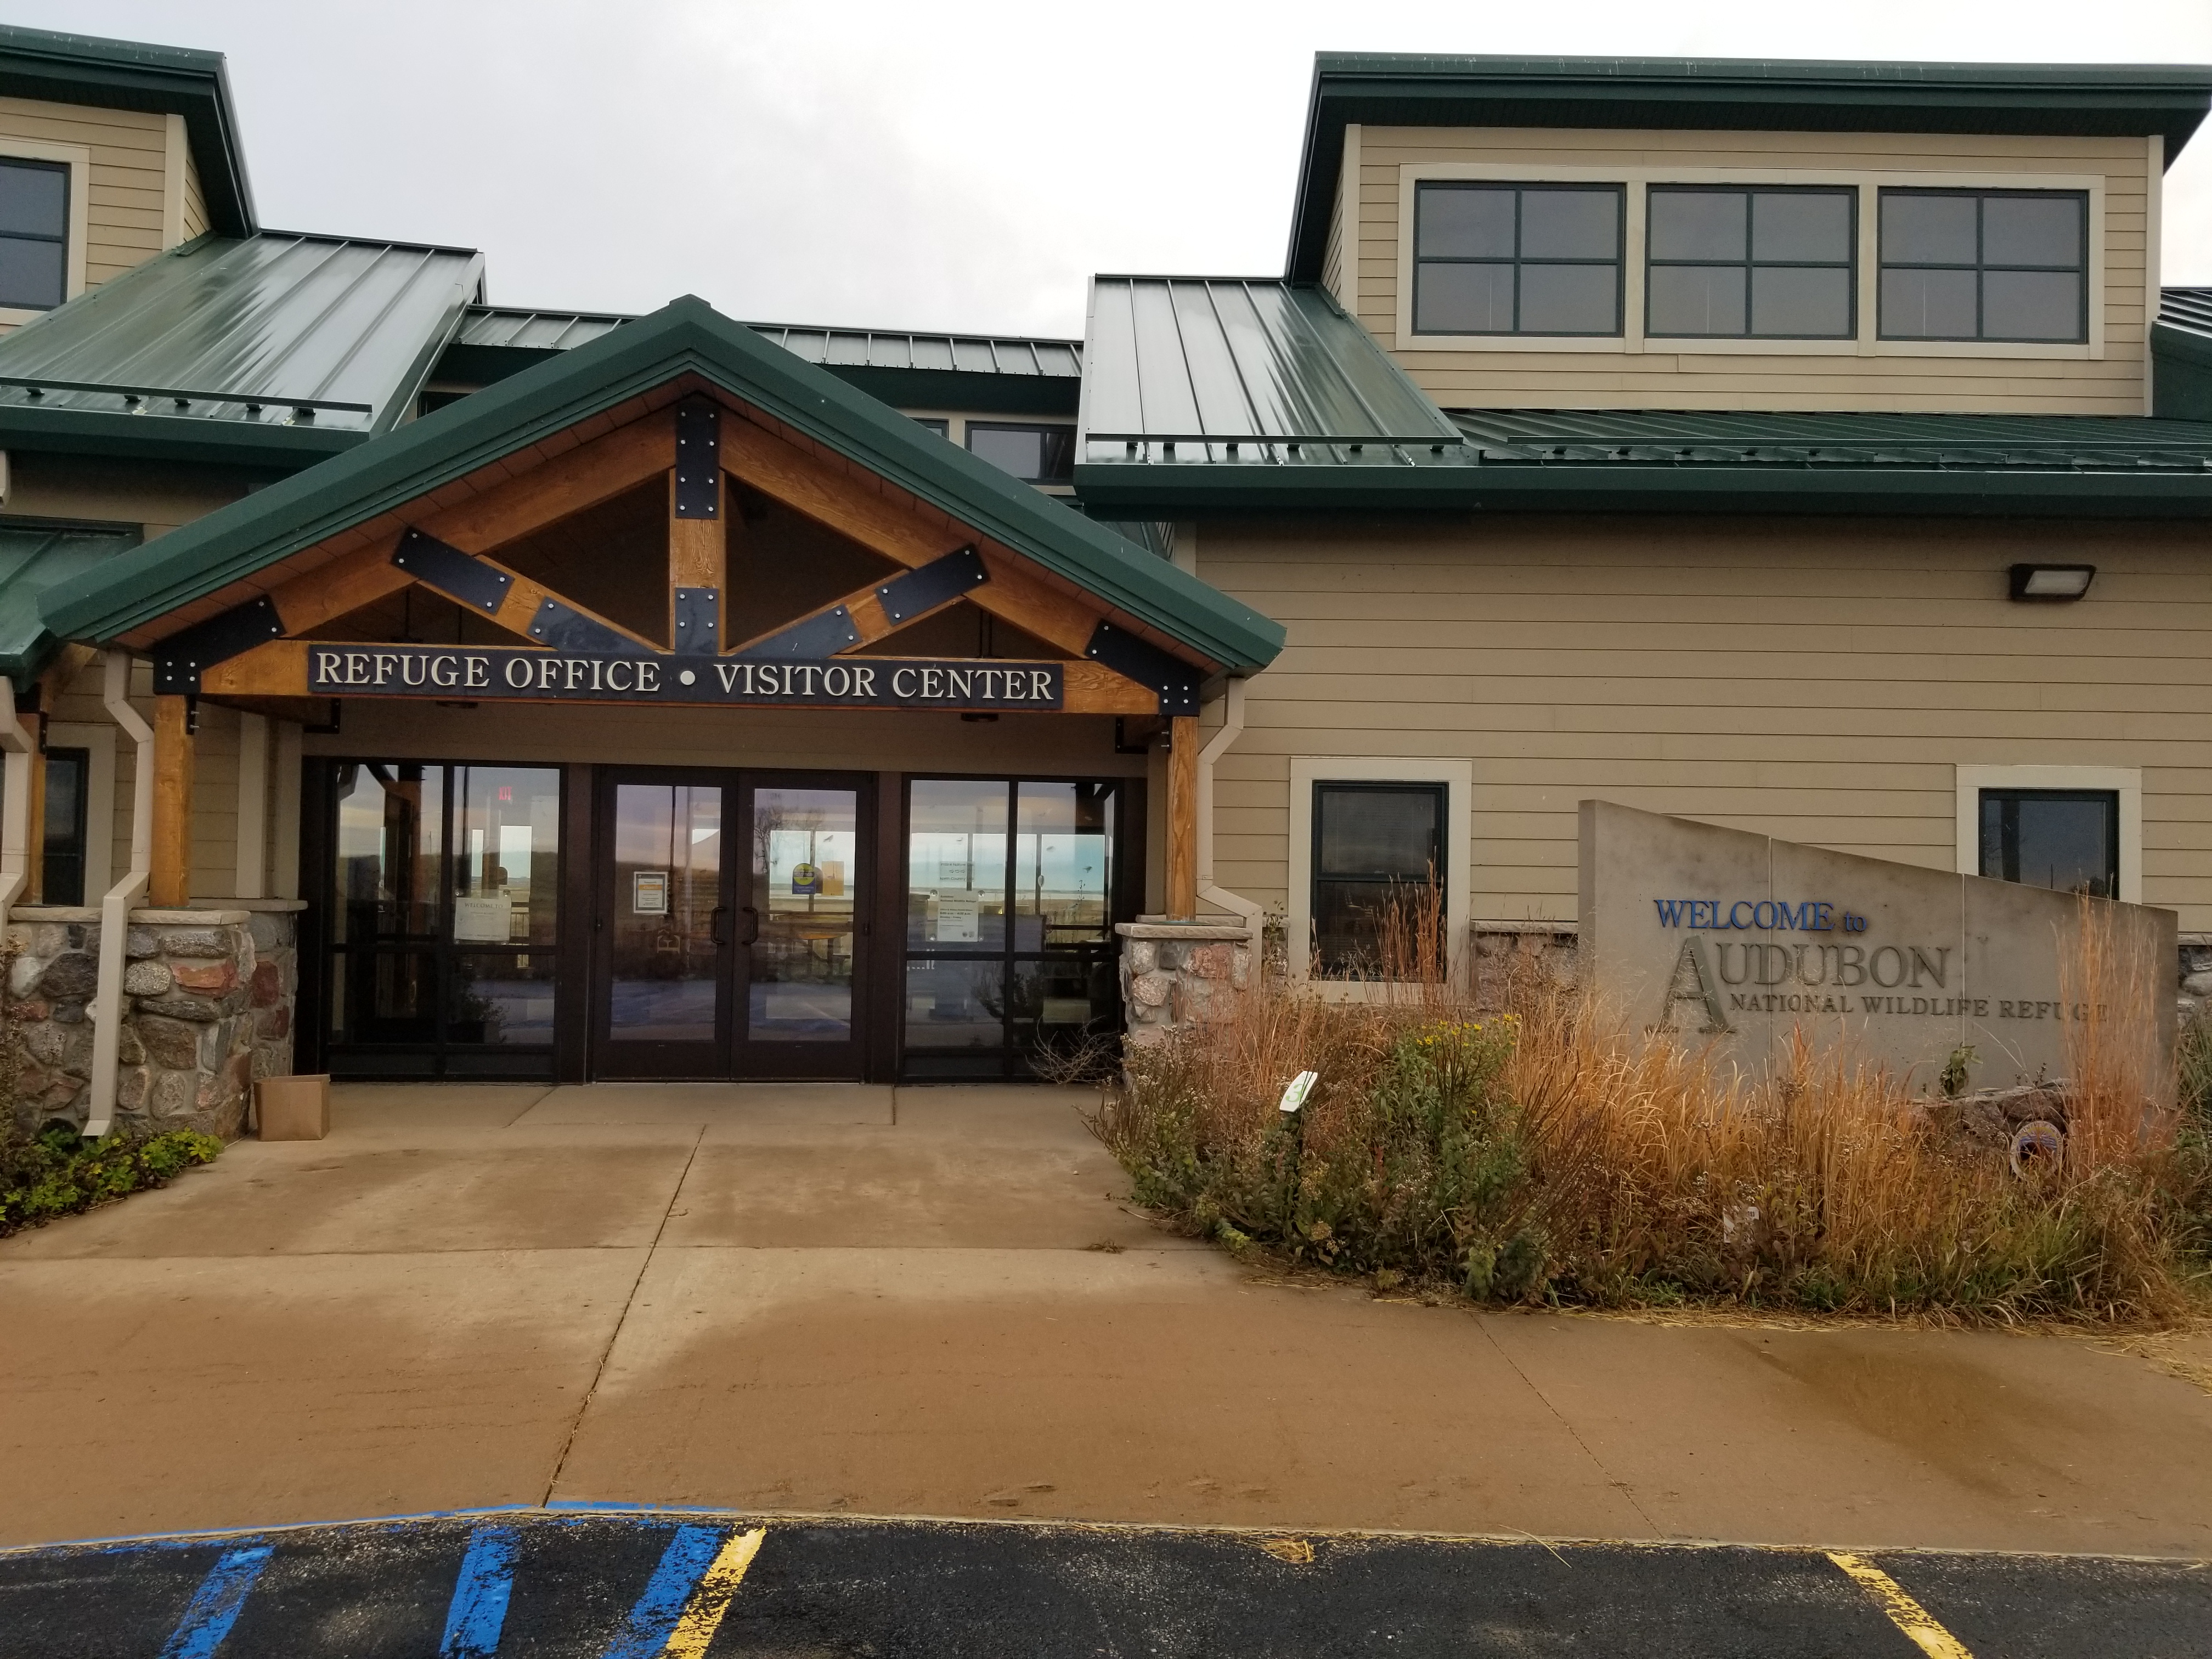 Audubon NWR Refuge Office - Visitor Center